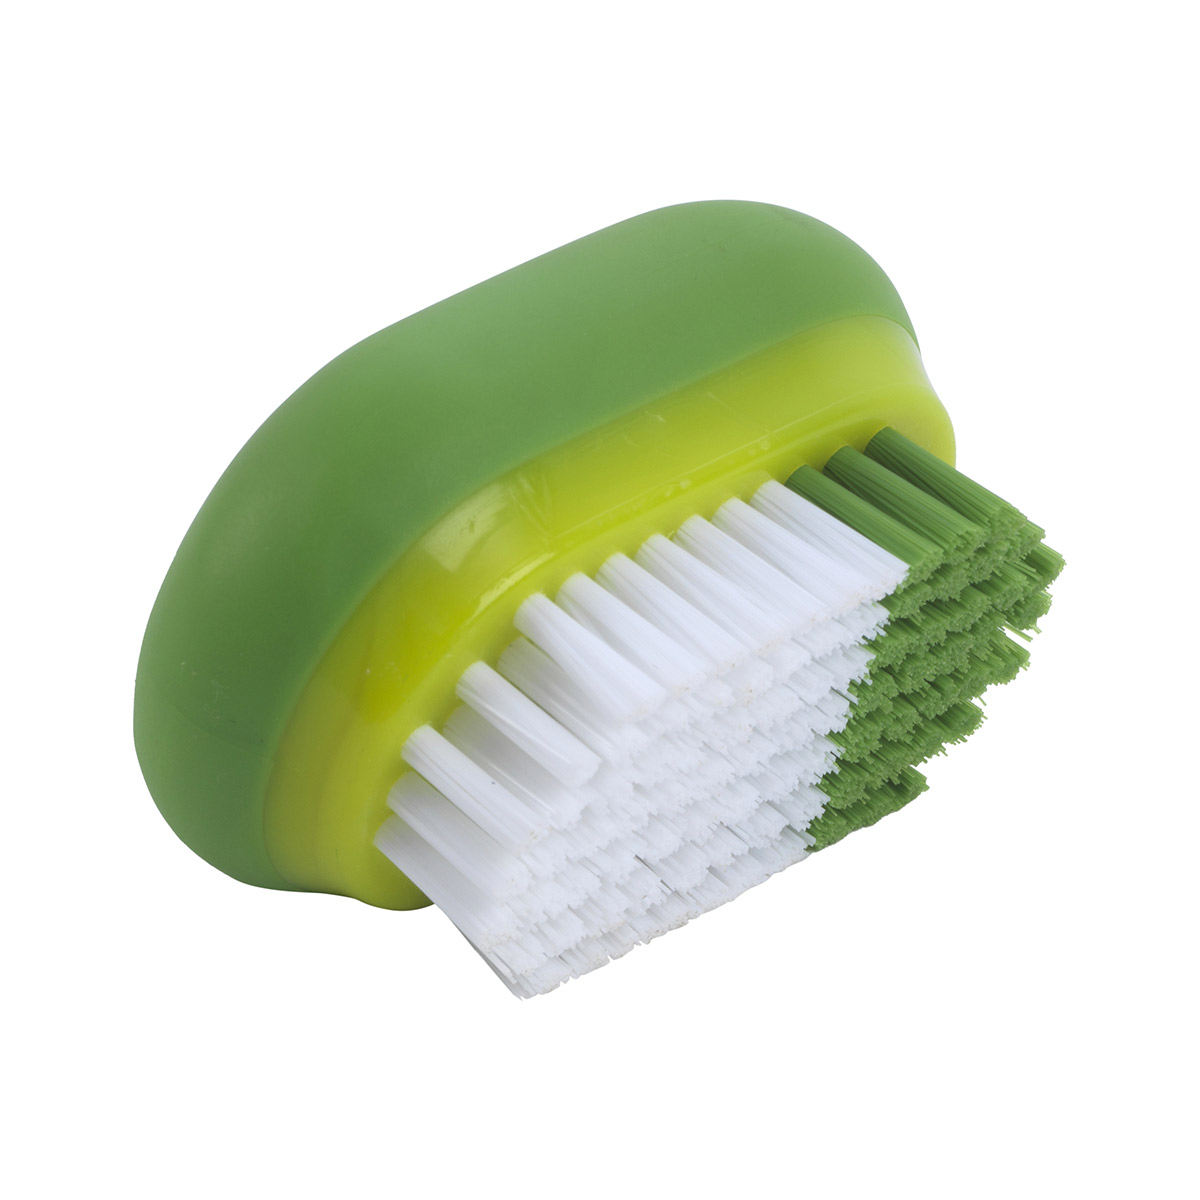 Cuisipro Flexible Vegetable Brush, Green